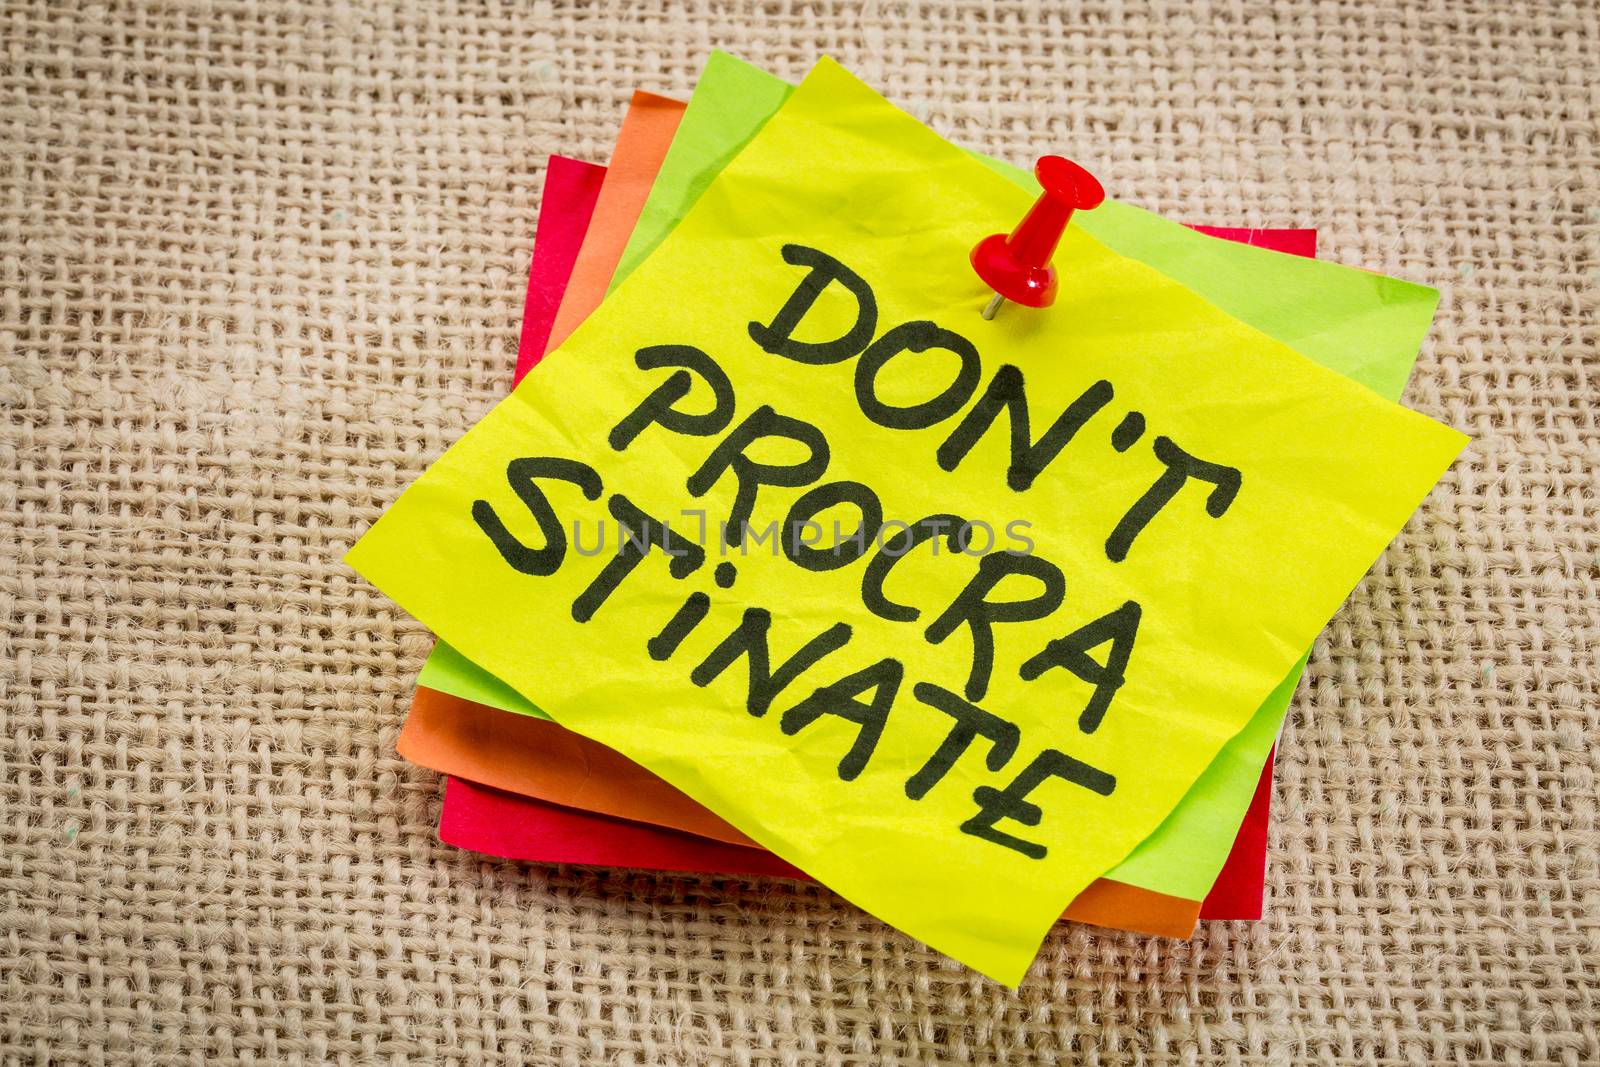 do not procrastinate reminder note by PixelsAway